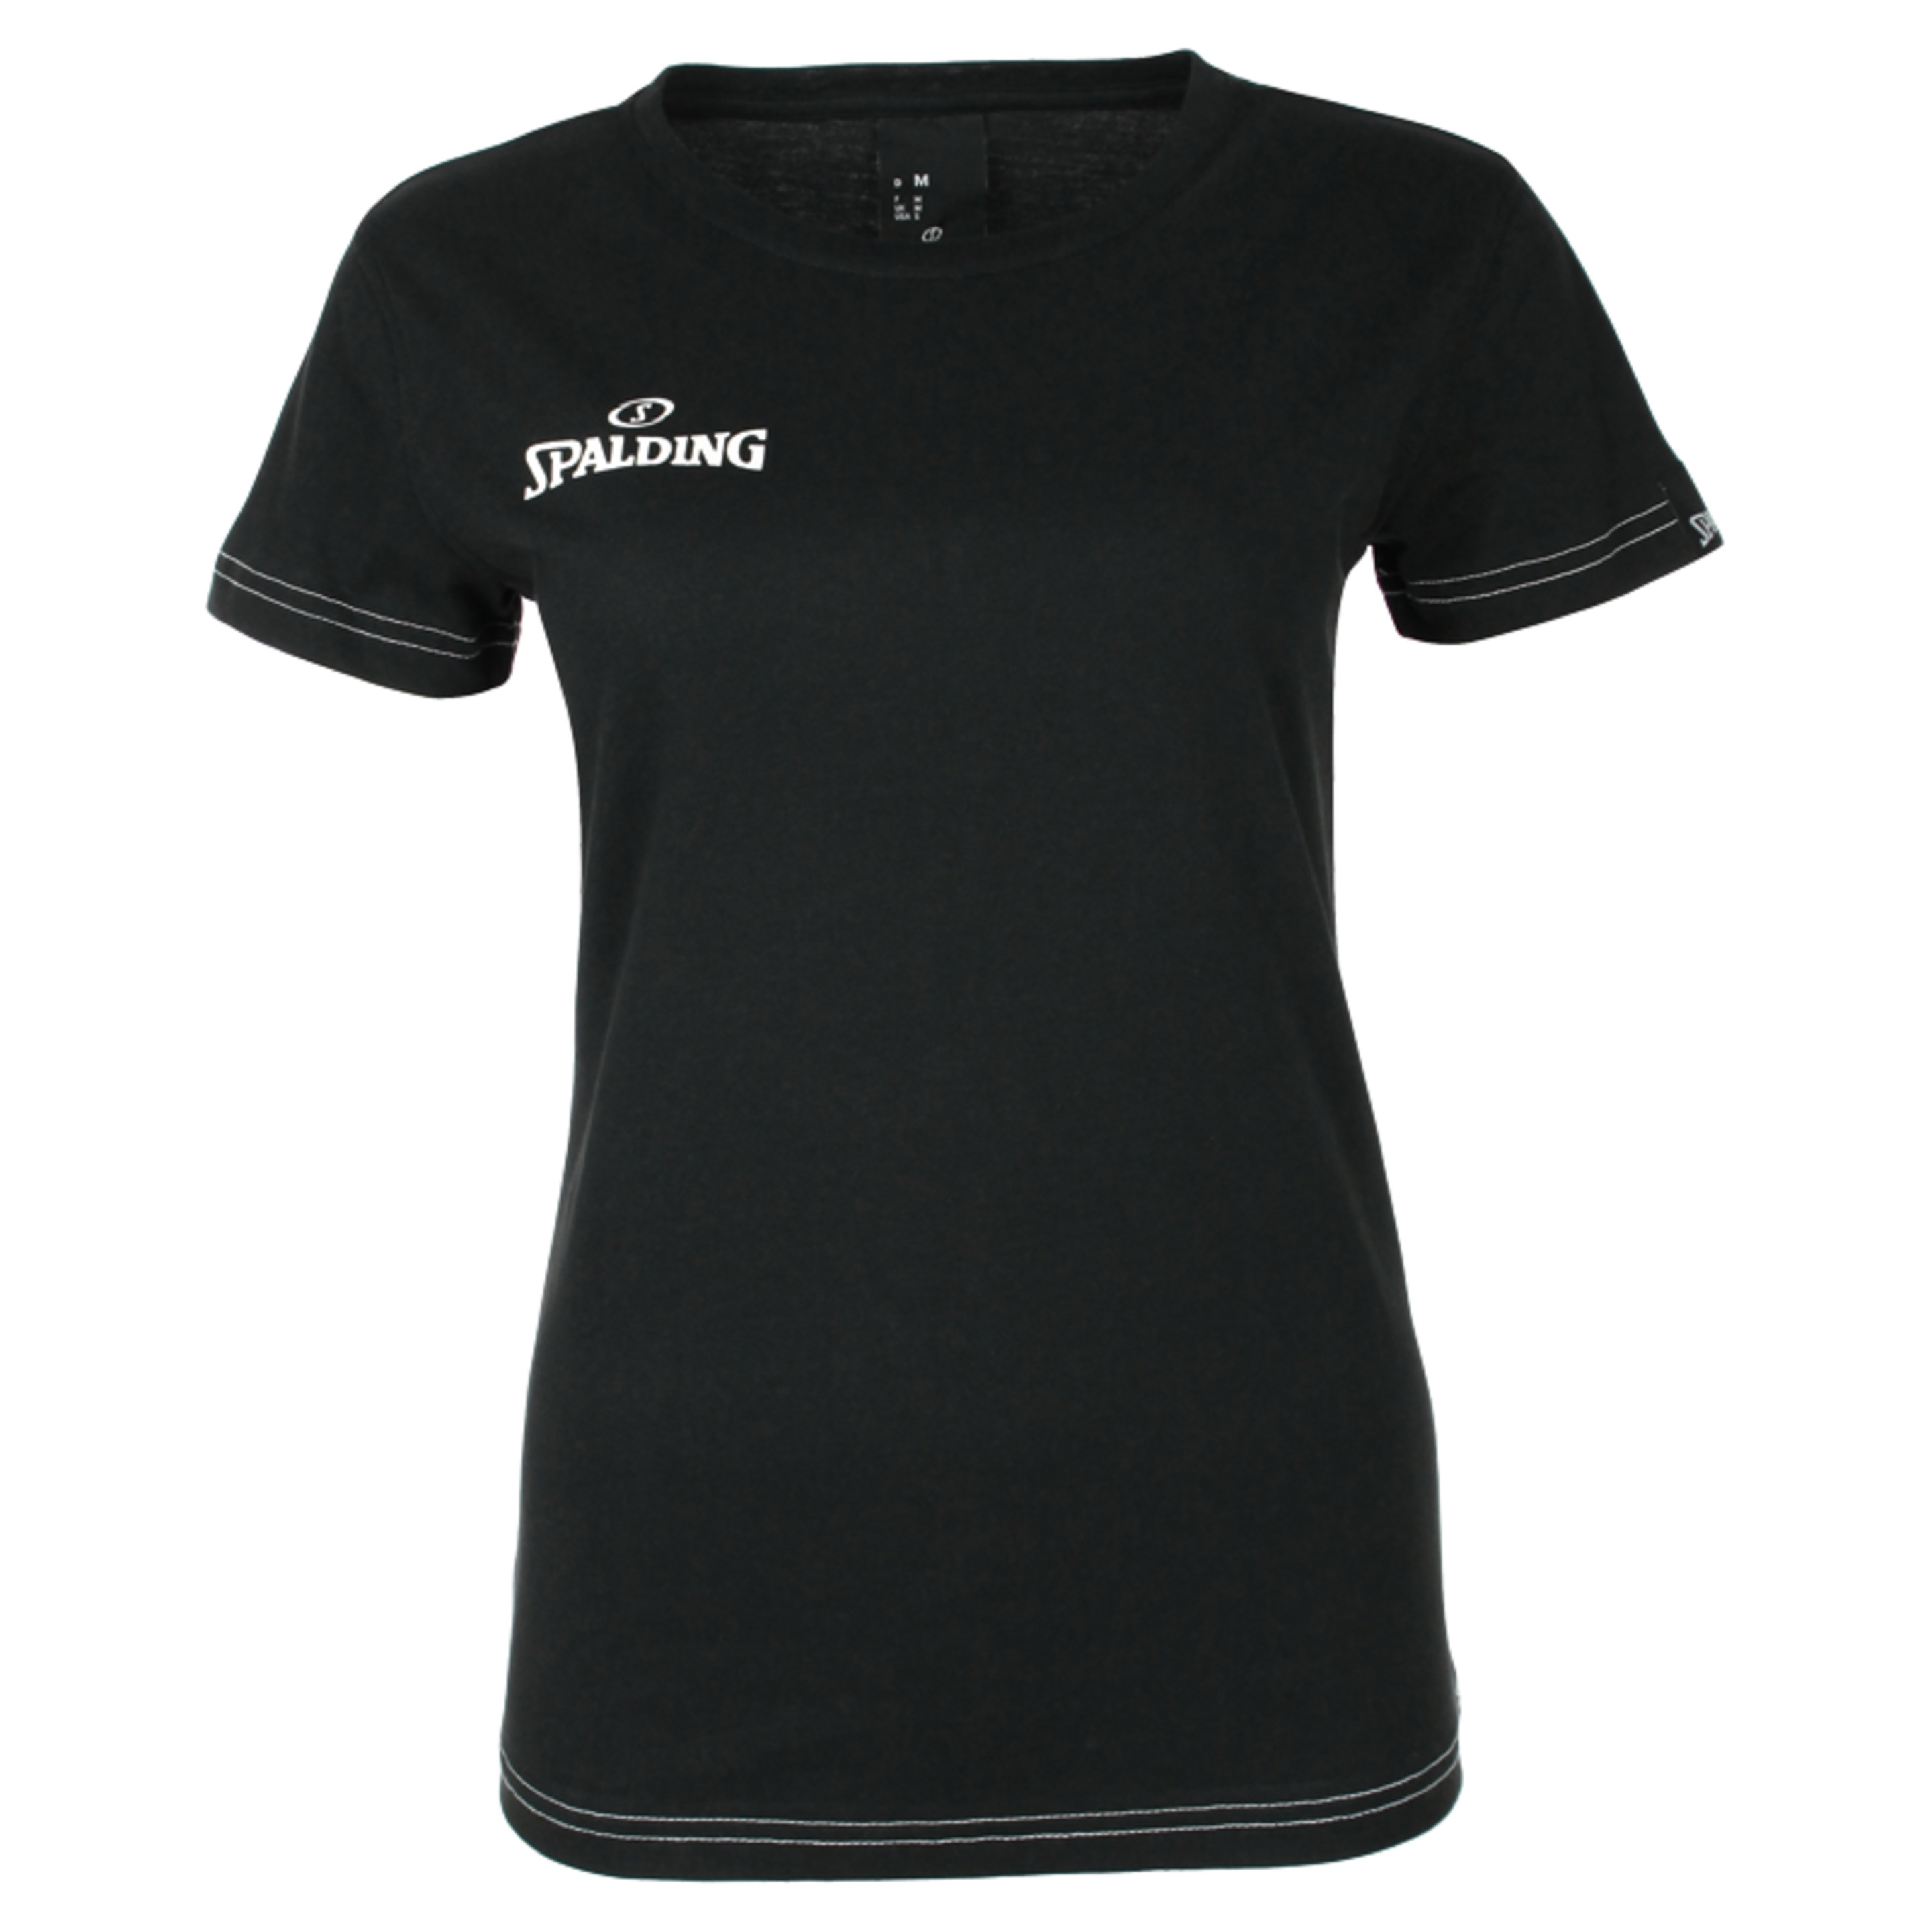 Team Ii T-shirt 4her Negro Spalding - negro - 